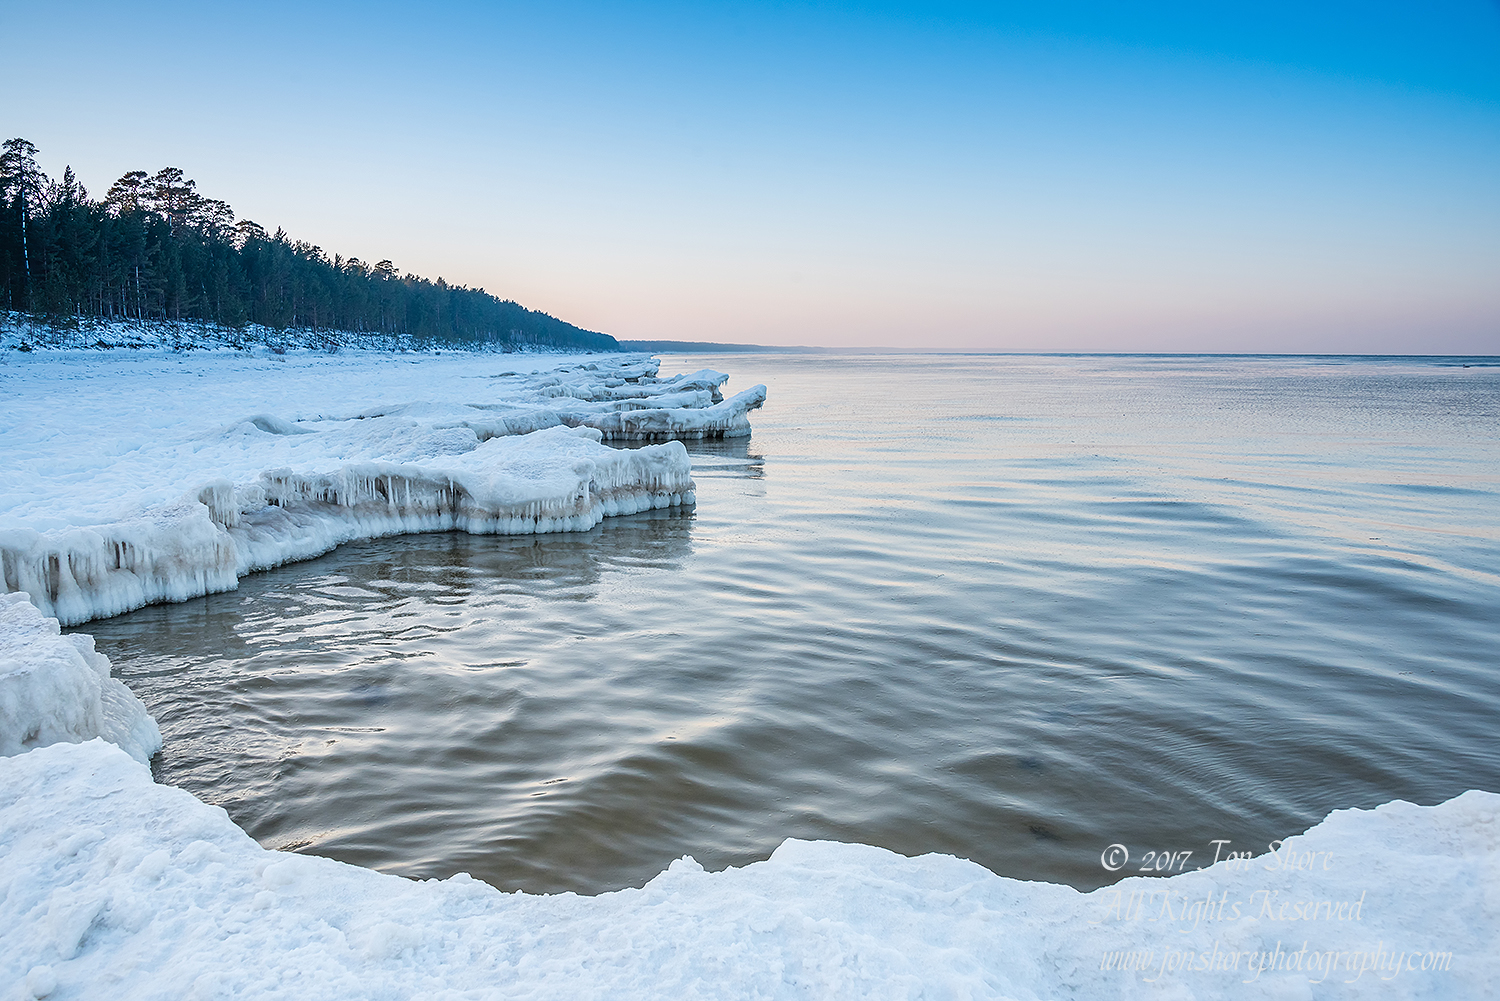 Winter at a Frozen Baltic Sea Beach. Nikkor 28mm